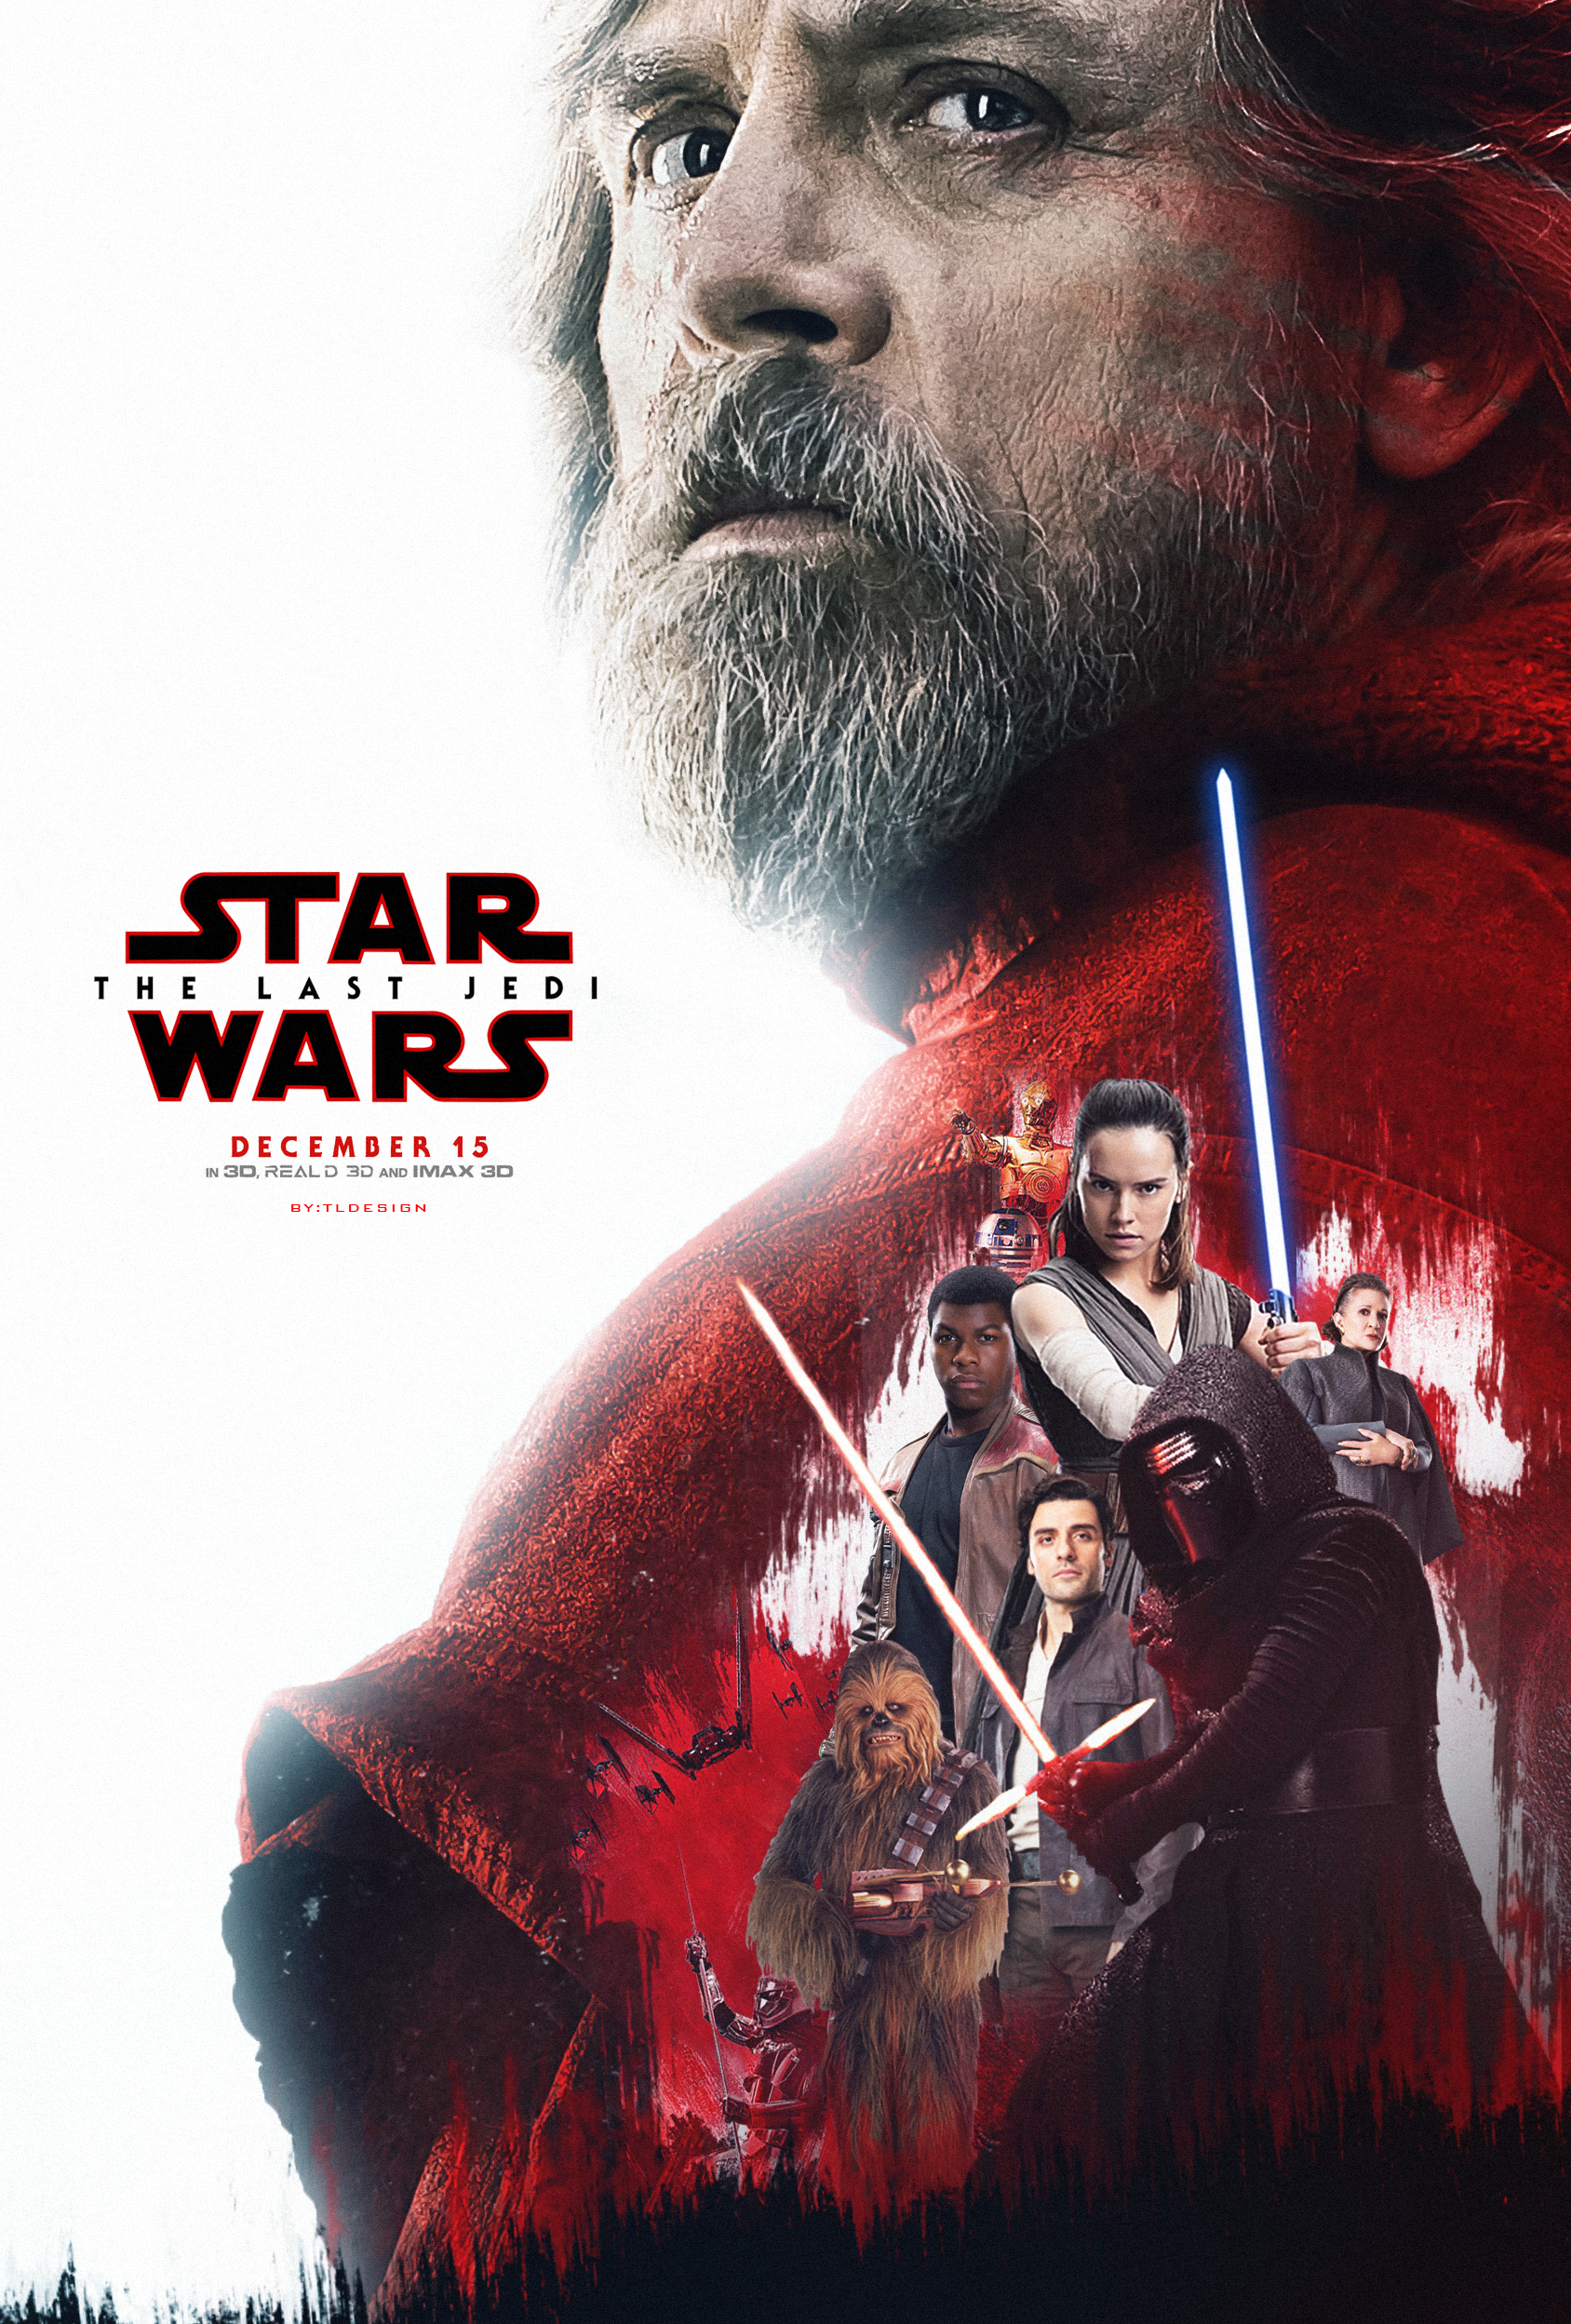 Star Wars The Last Jedi Daisy Ridley Rey From Star Wars Mark Hamill Luke Skywalker Adam Driver Kylo  1688x2497